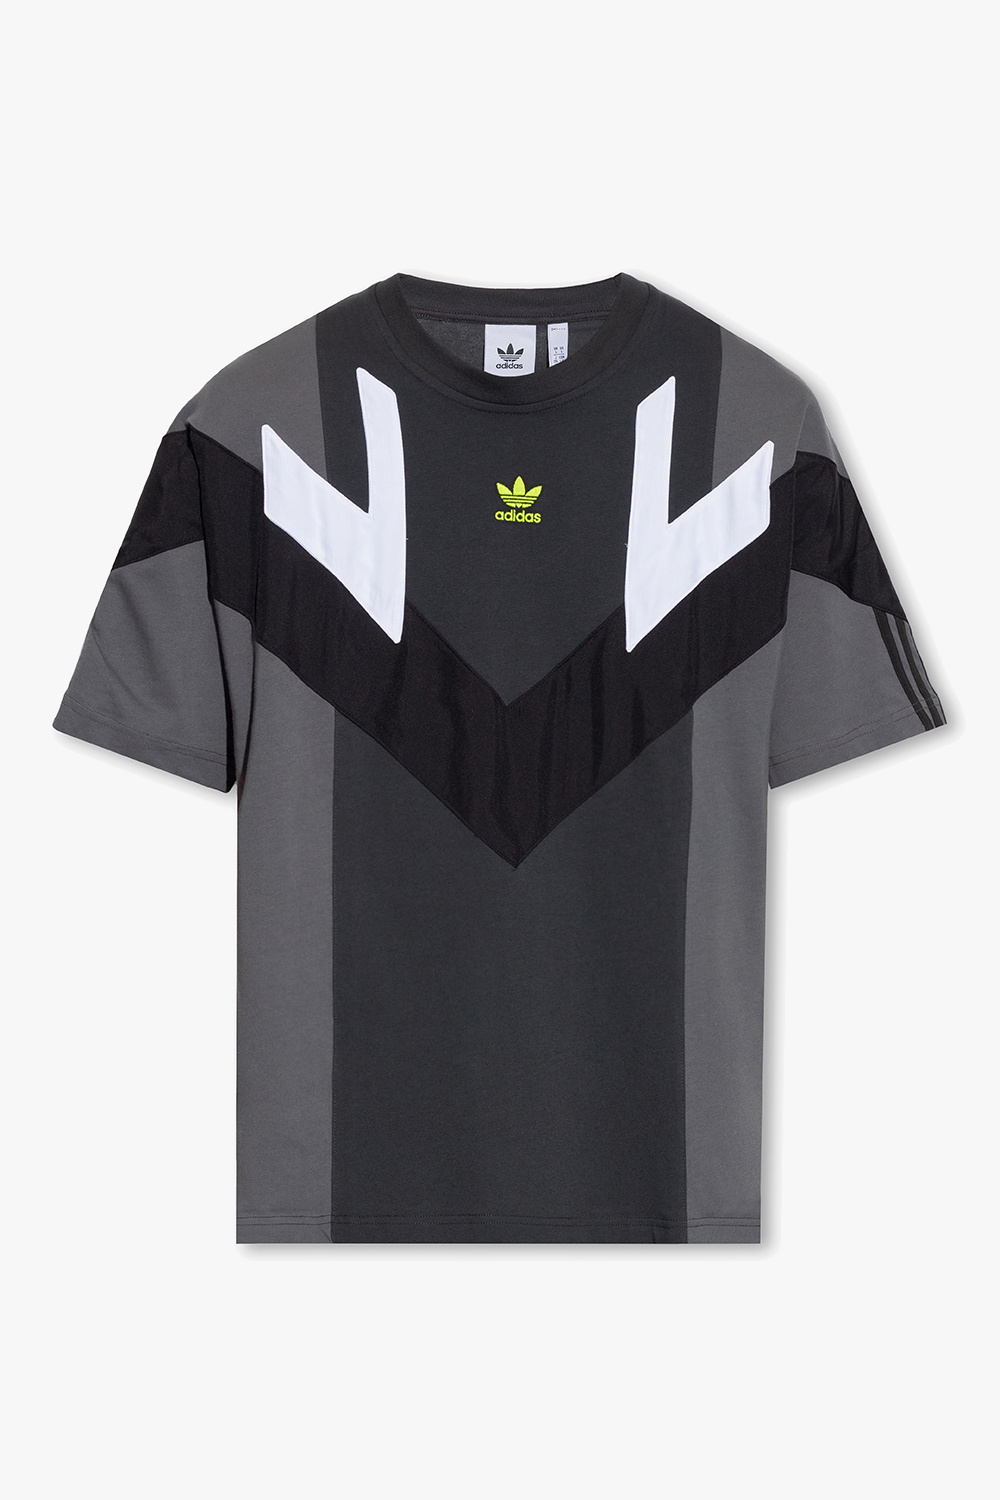 Pre-Loved Adidas Brazil Black / Grey Track Jacket - M / L – Rokit